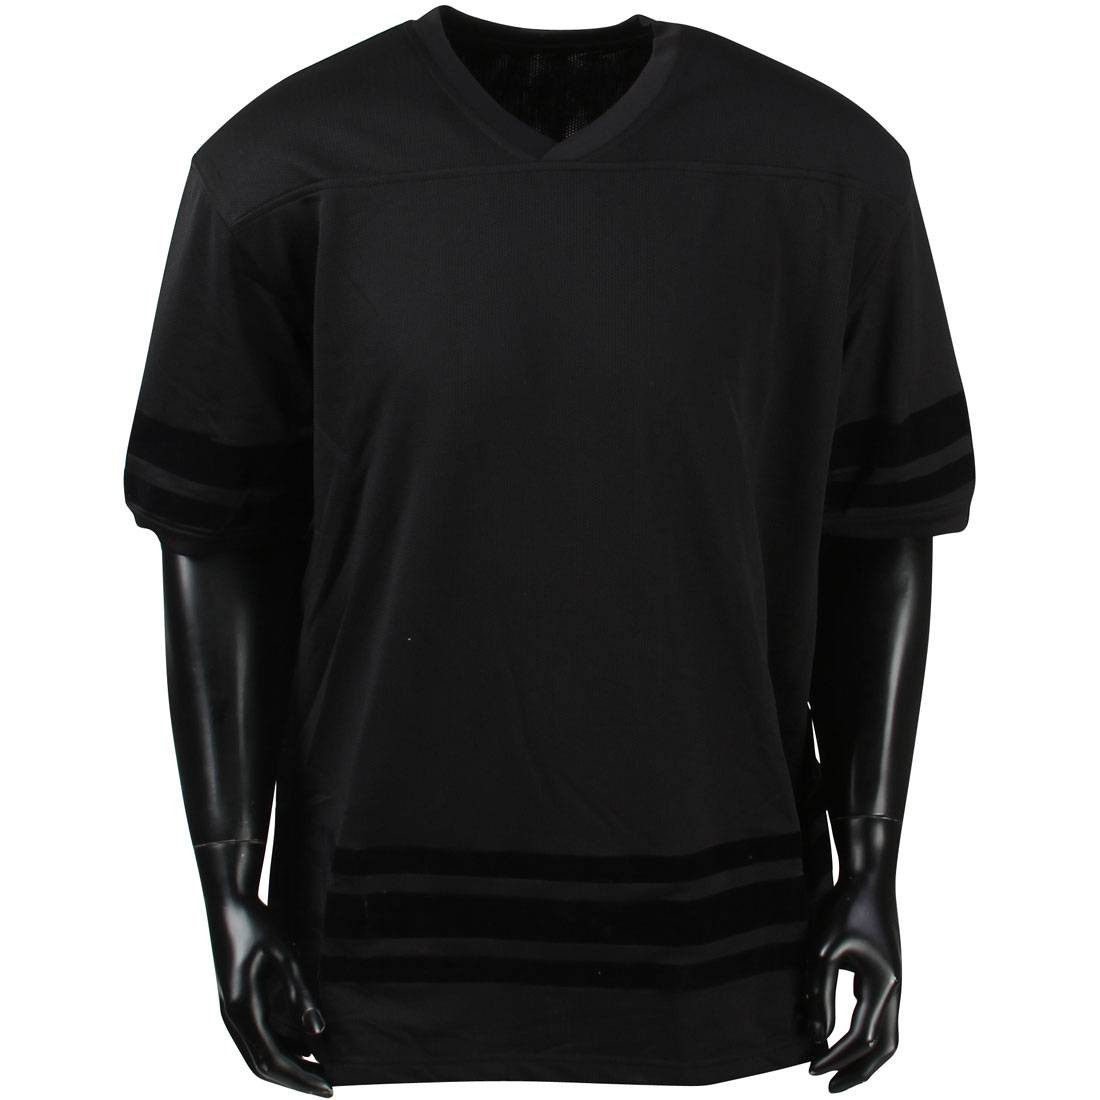 black mesh football jersey